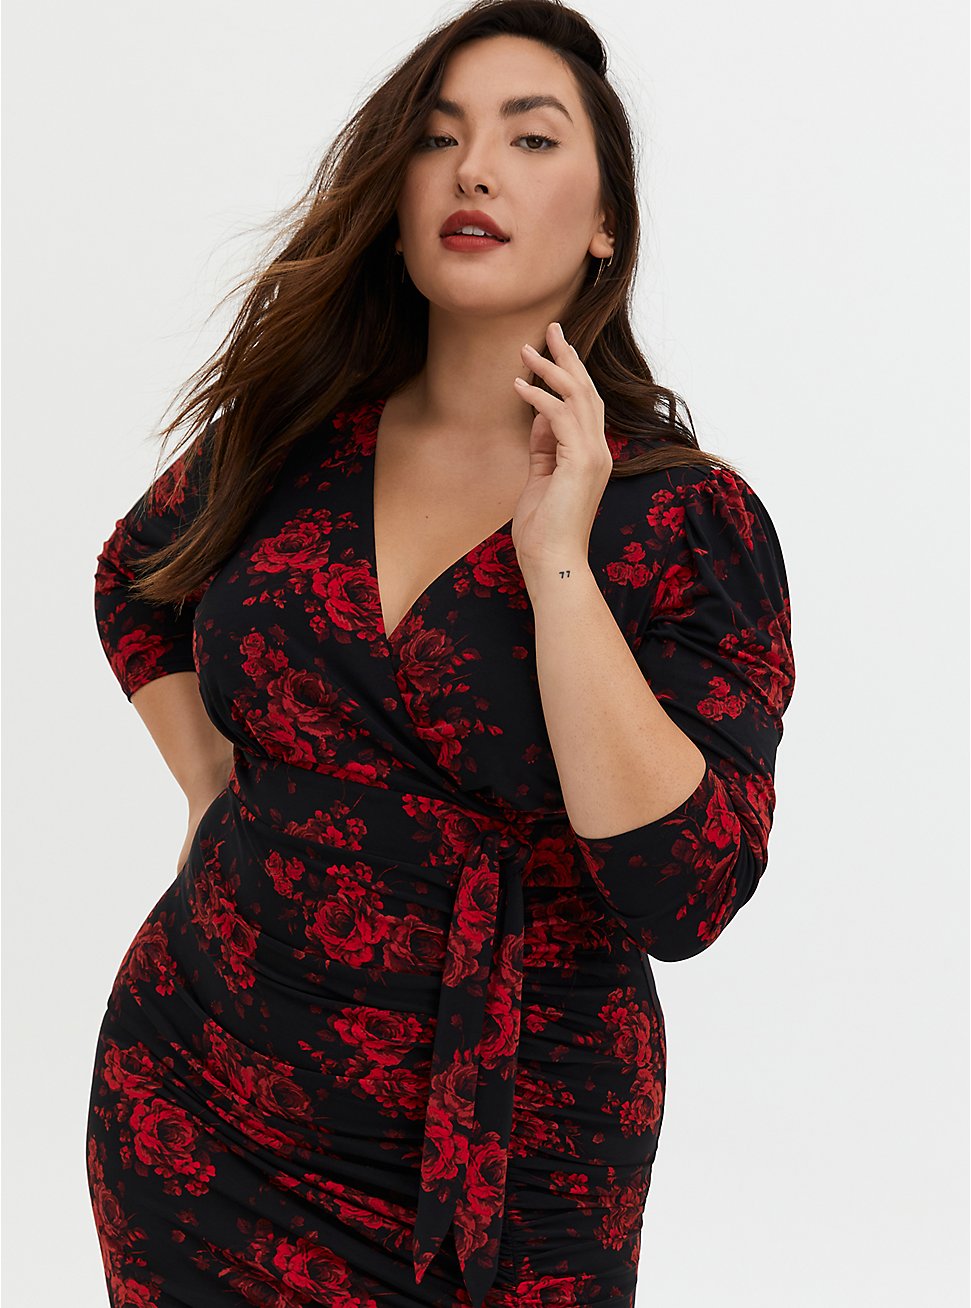 Details about   Torrid Womens Shirt Dress Black Floral Maxi Sleeveless Self Tie Slit Plus 4X New